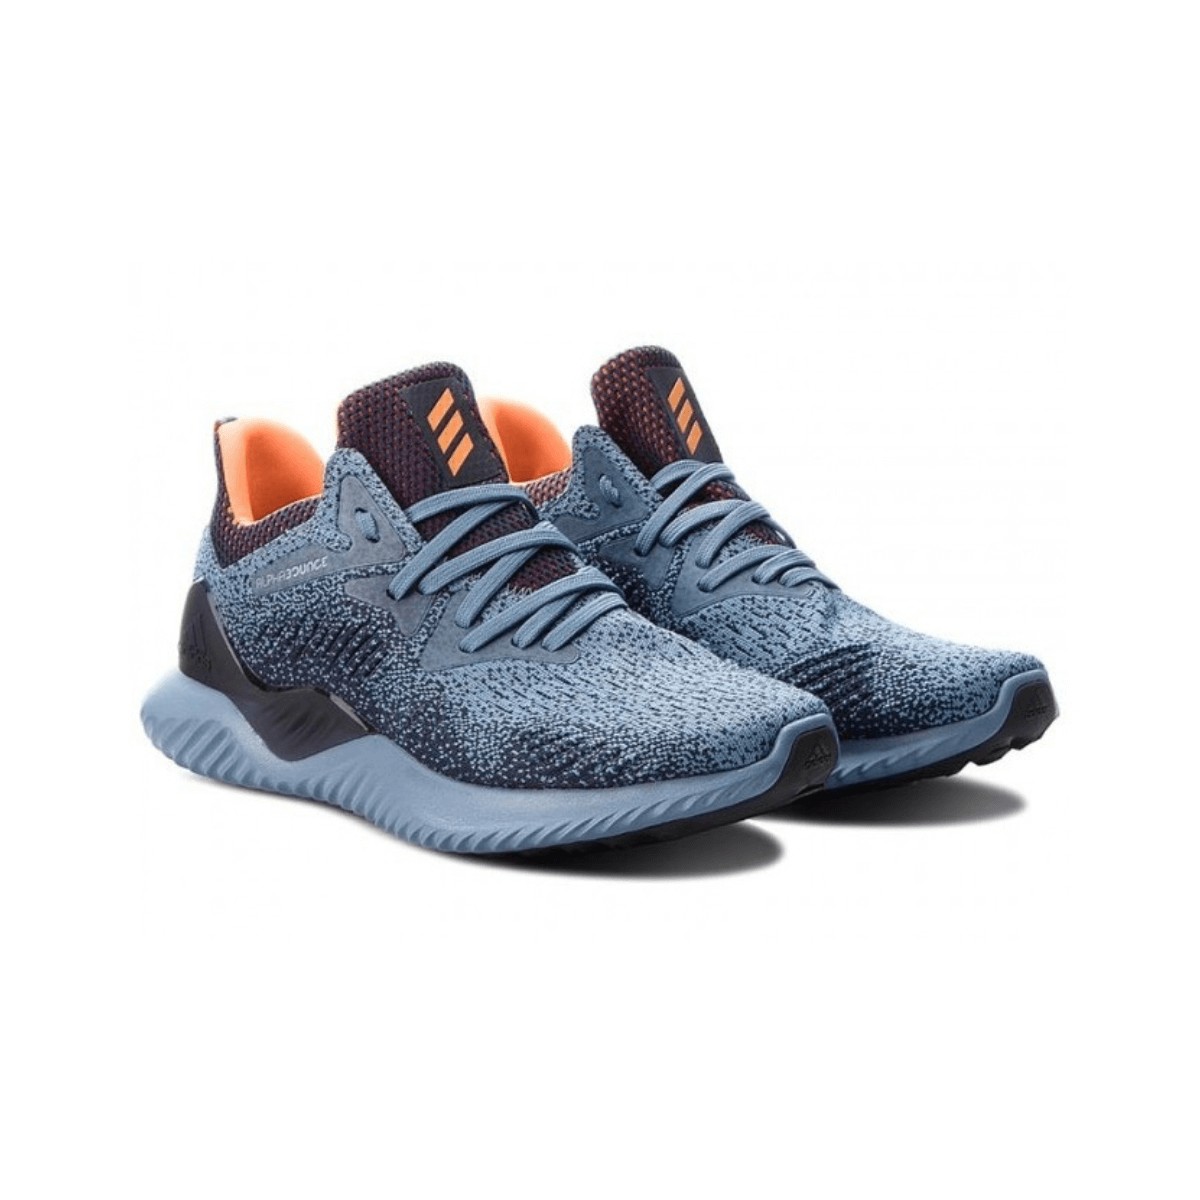 Adidas Alphabounce Beyond Men's Running Shoes Grey Black Orange